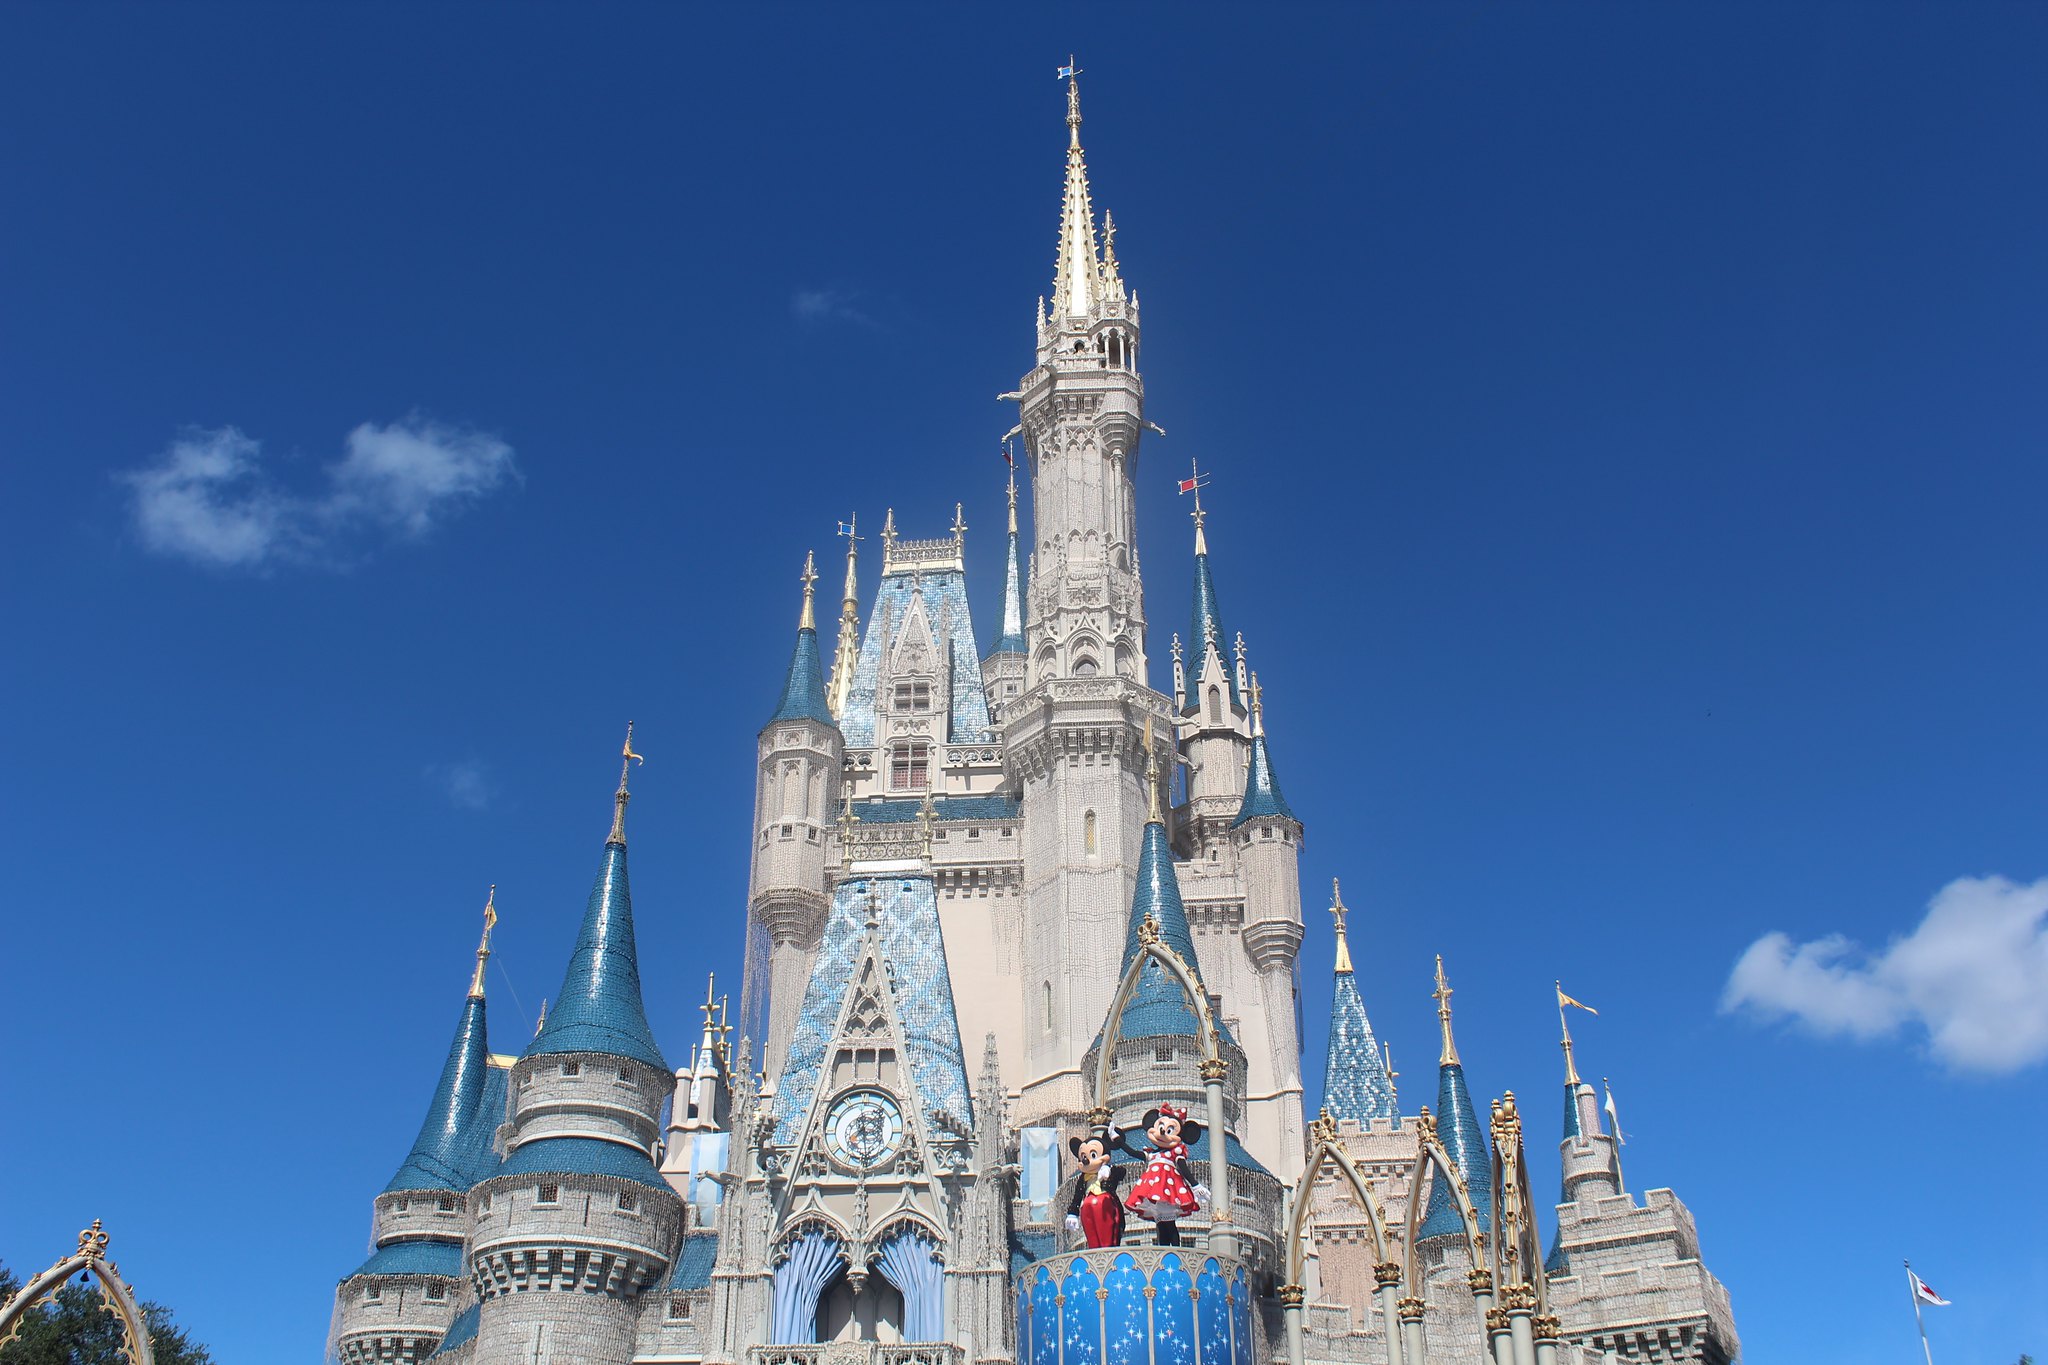 Disney's Magic Kingdom, Theme Park Tourist